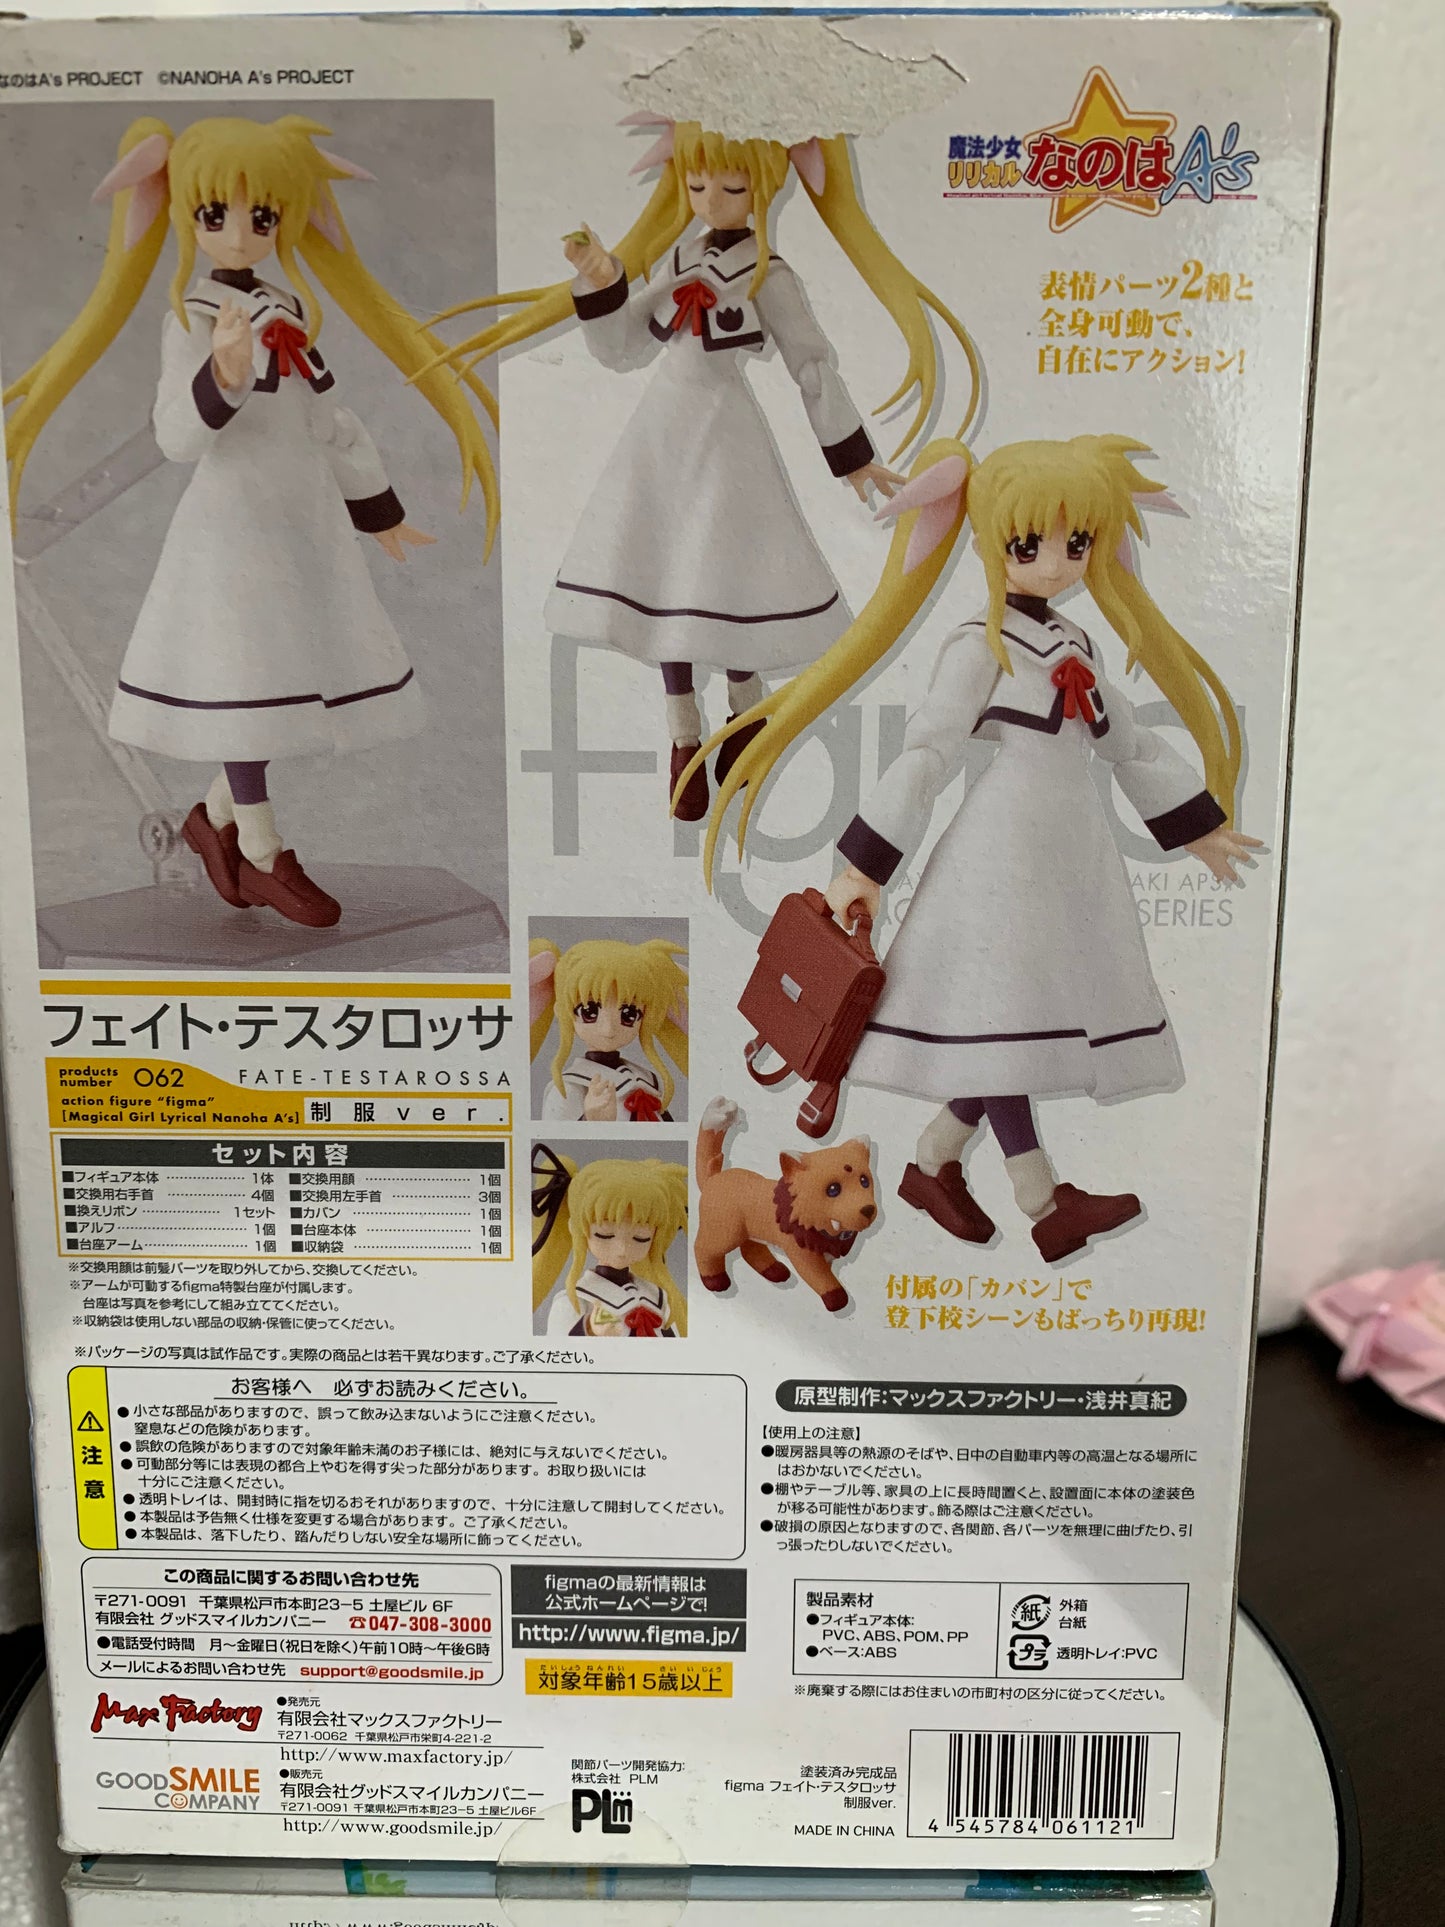 Fate Testarossa Max Factory Figma ~11cm Magical Girl Lyrical Nanoha A’s product #062 action figure series #081